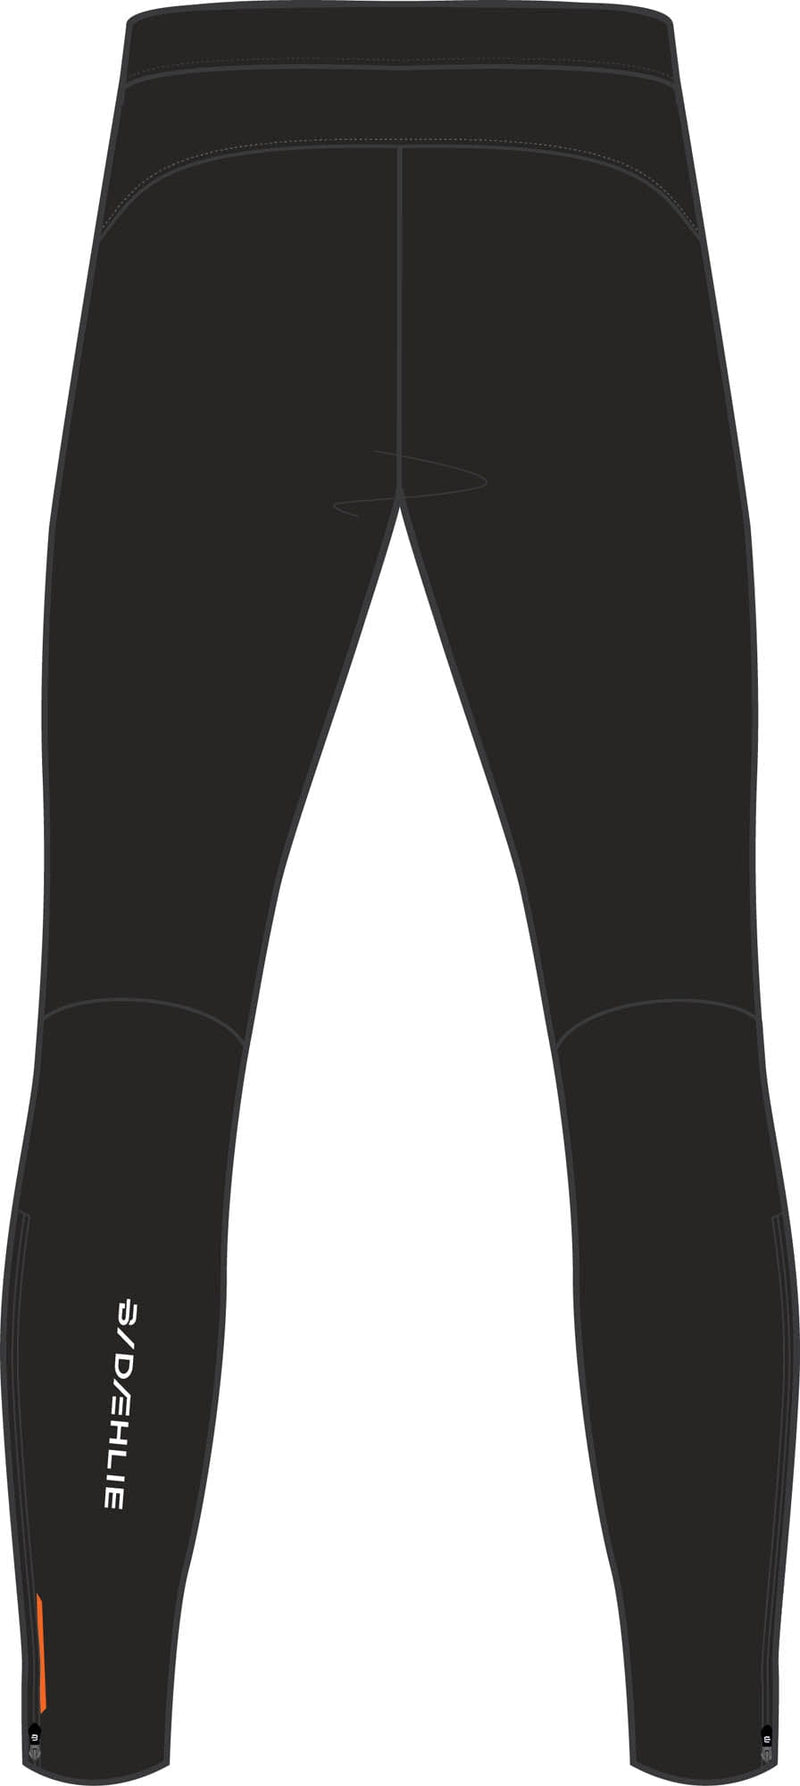 Daehlie CLOTHING - Men - Nordic - Bottom Daehlie *23W*  Pants Challenge